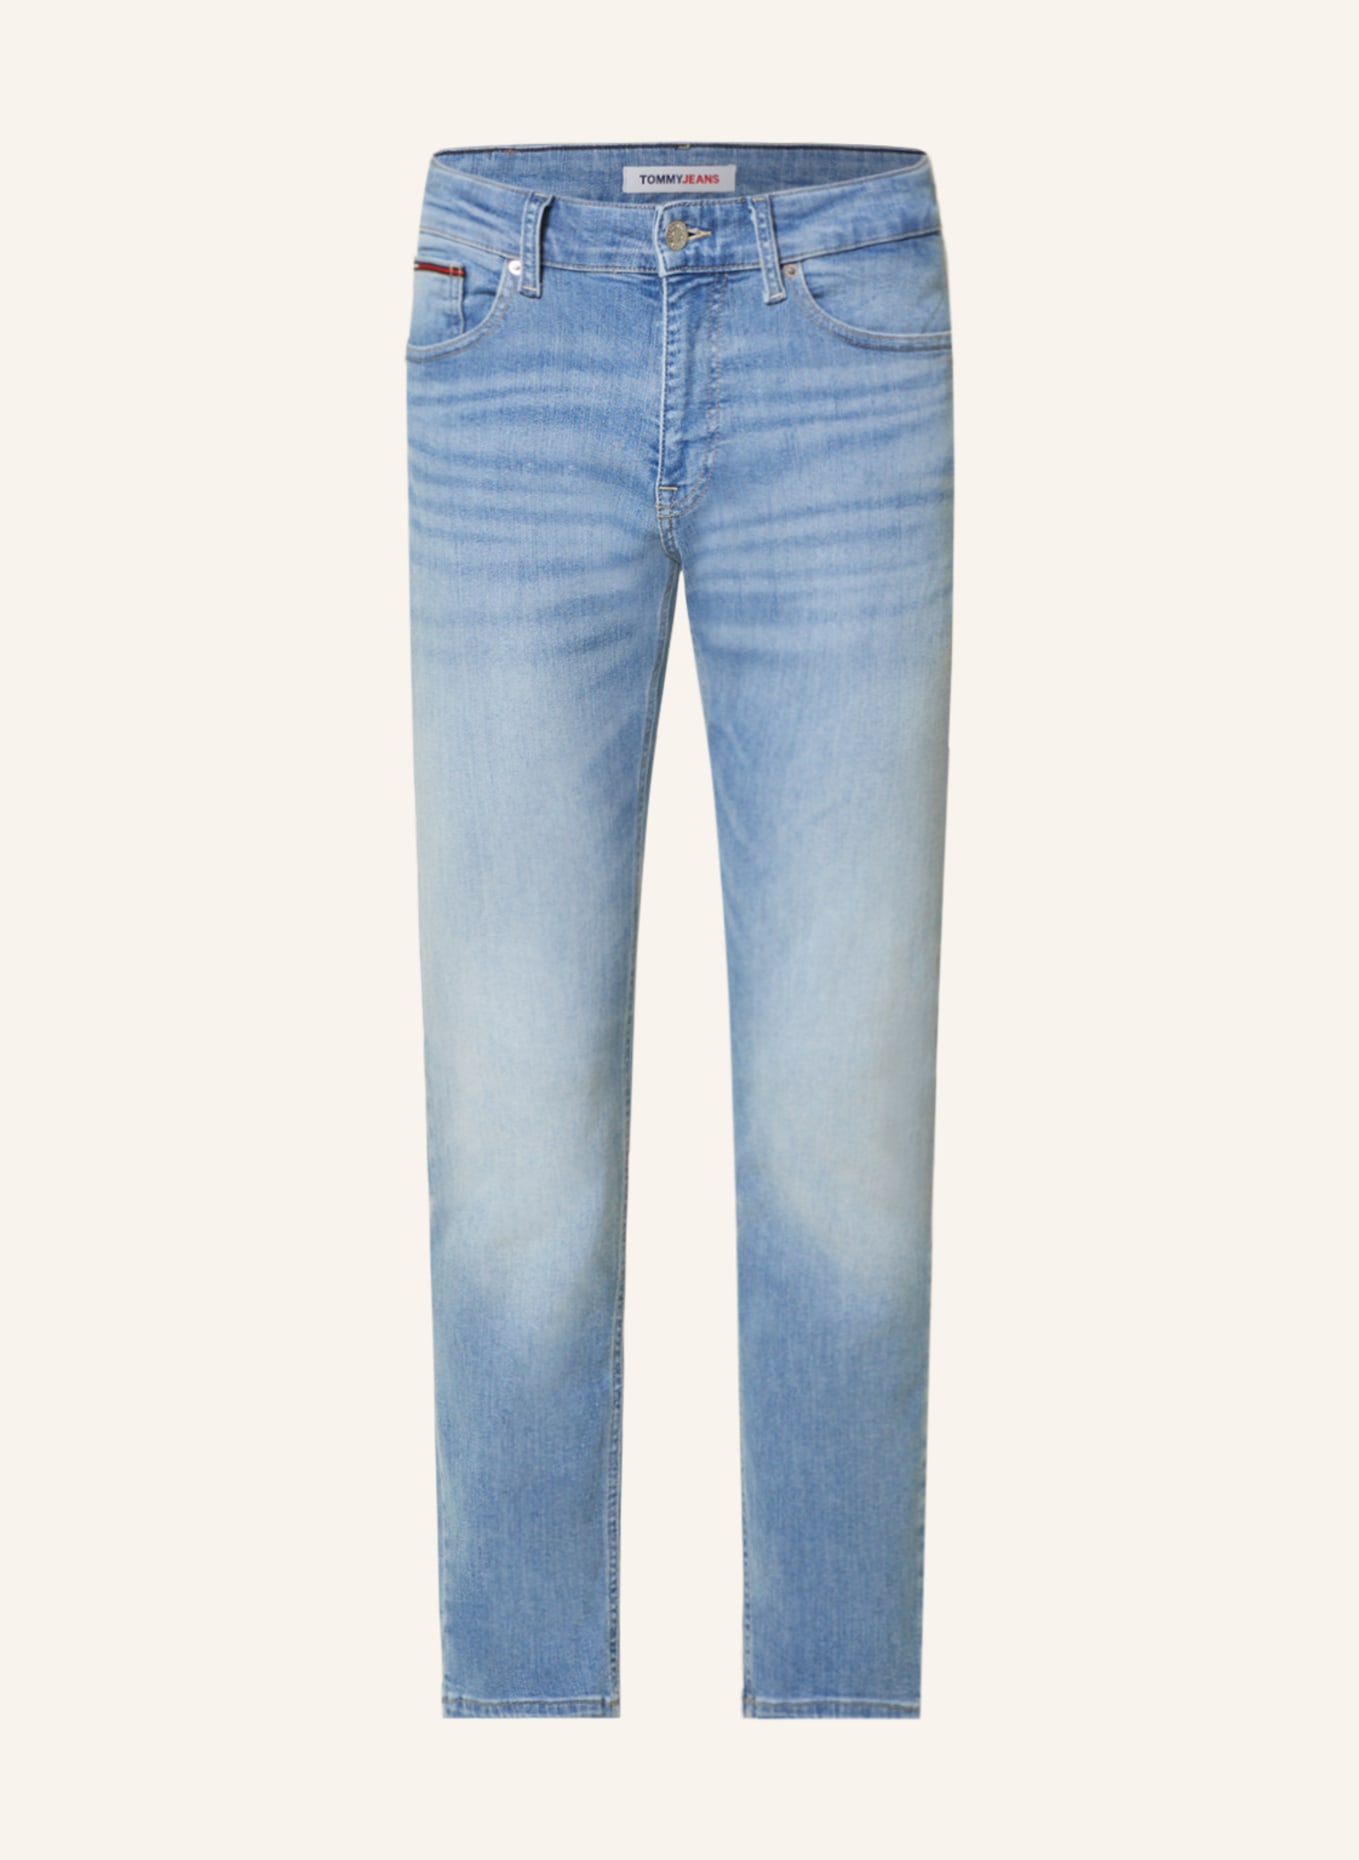 TOMMY JEANS Jeans SCANTON Slim Fit, Farbe: 1AB Denim Light (Bild 1)